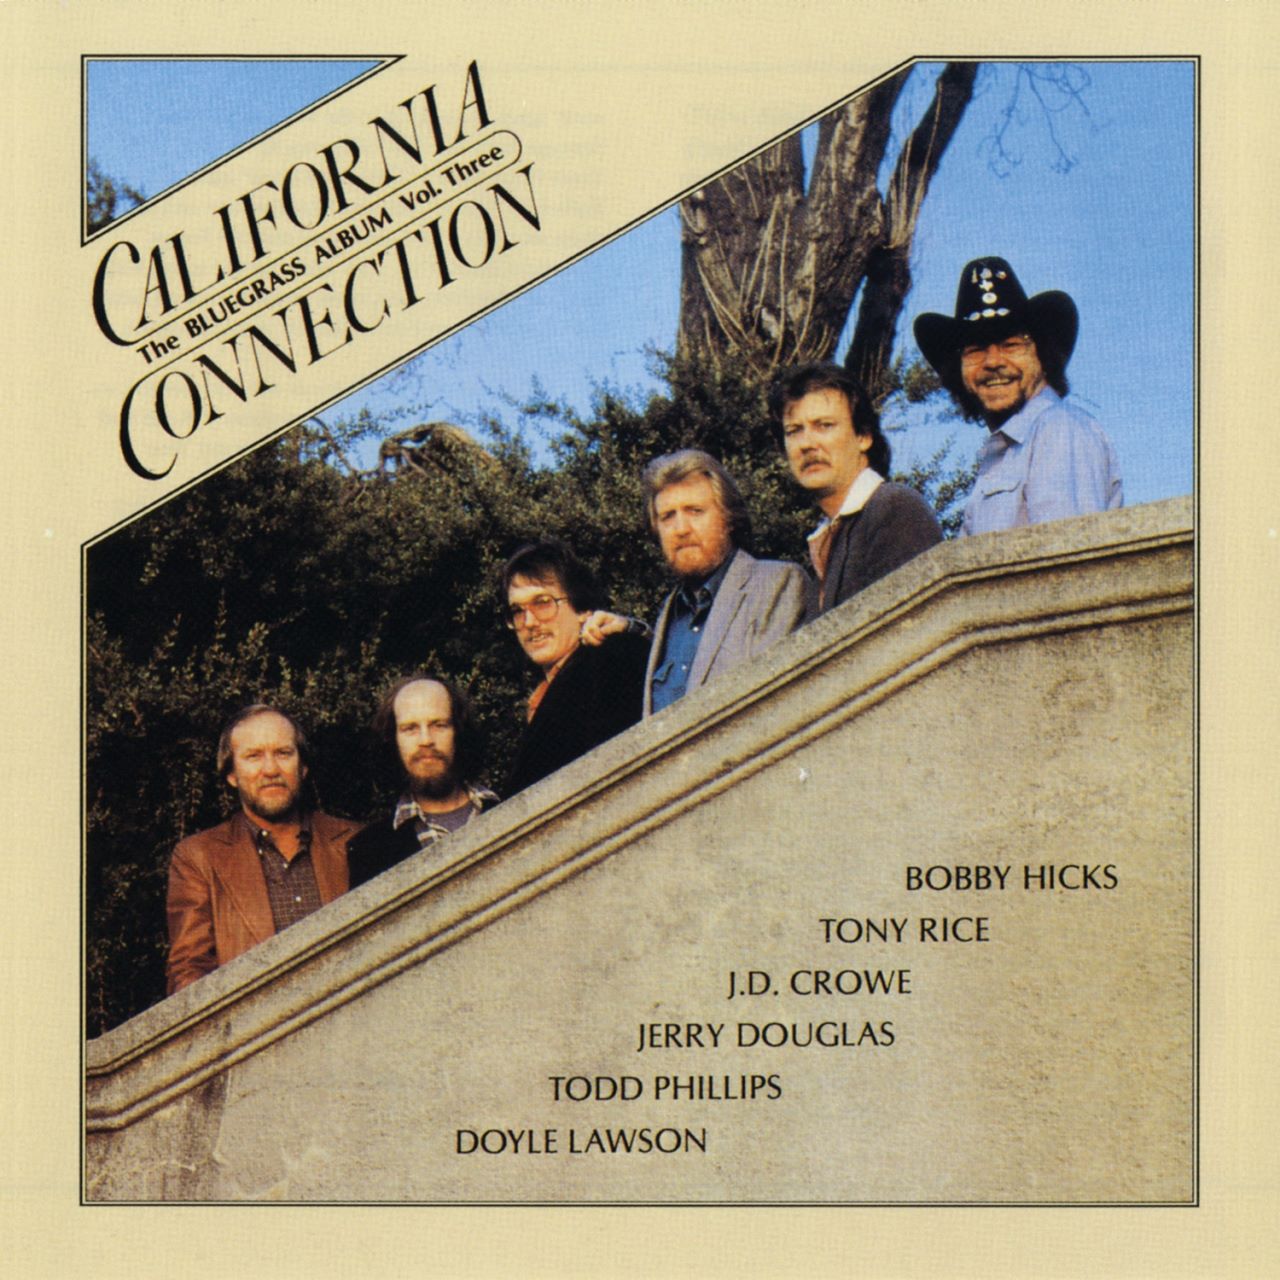 Bluegrass Album Band - California Connection - The Bluegrass Album, Vol. 3 cover album